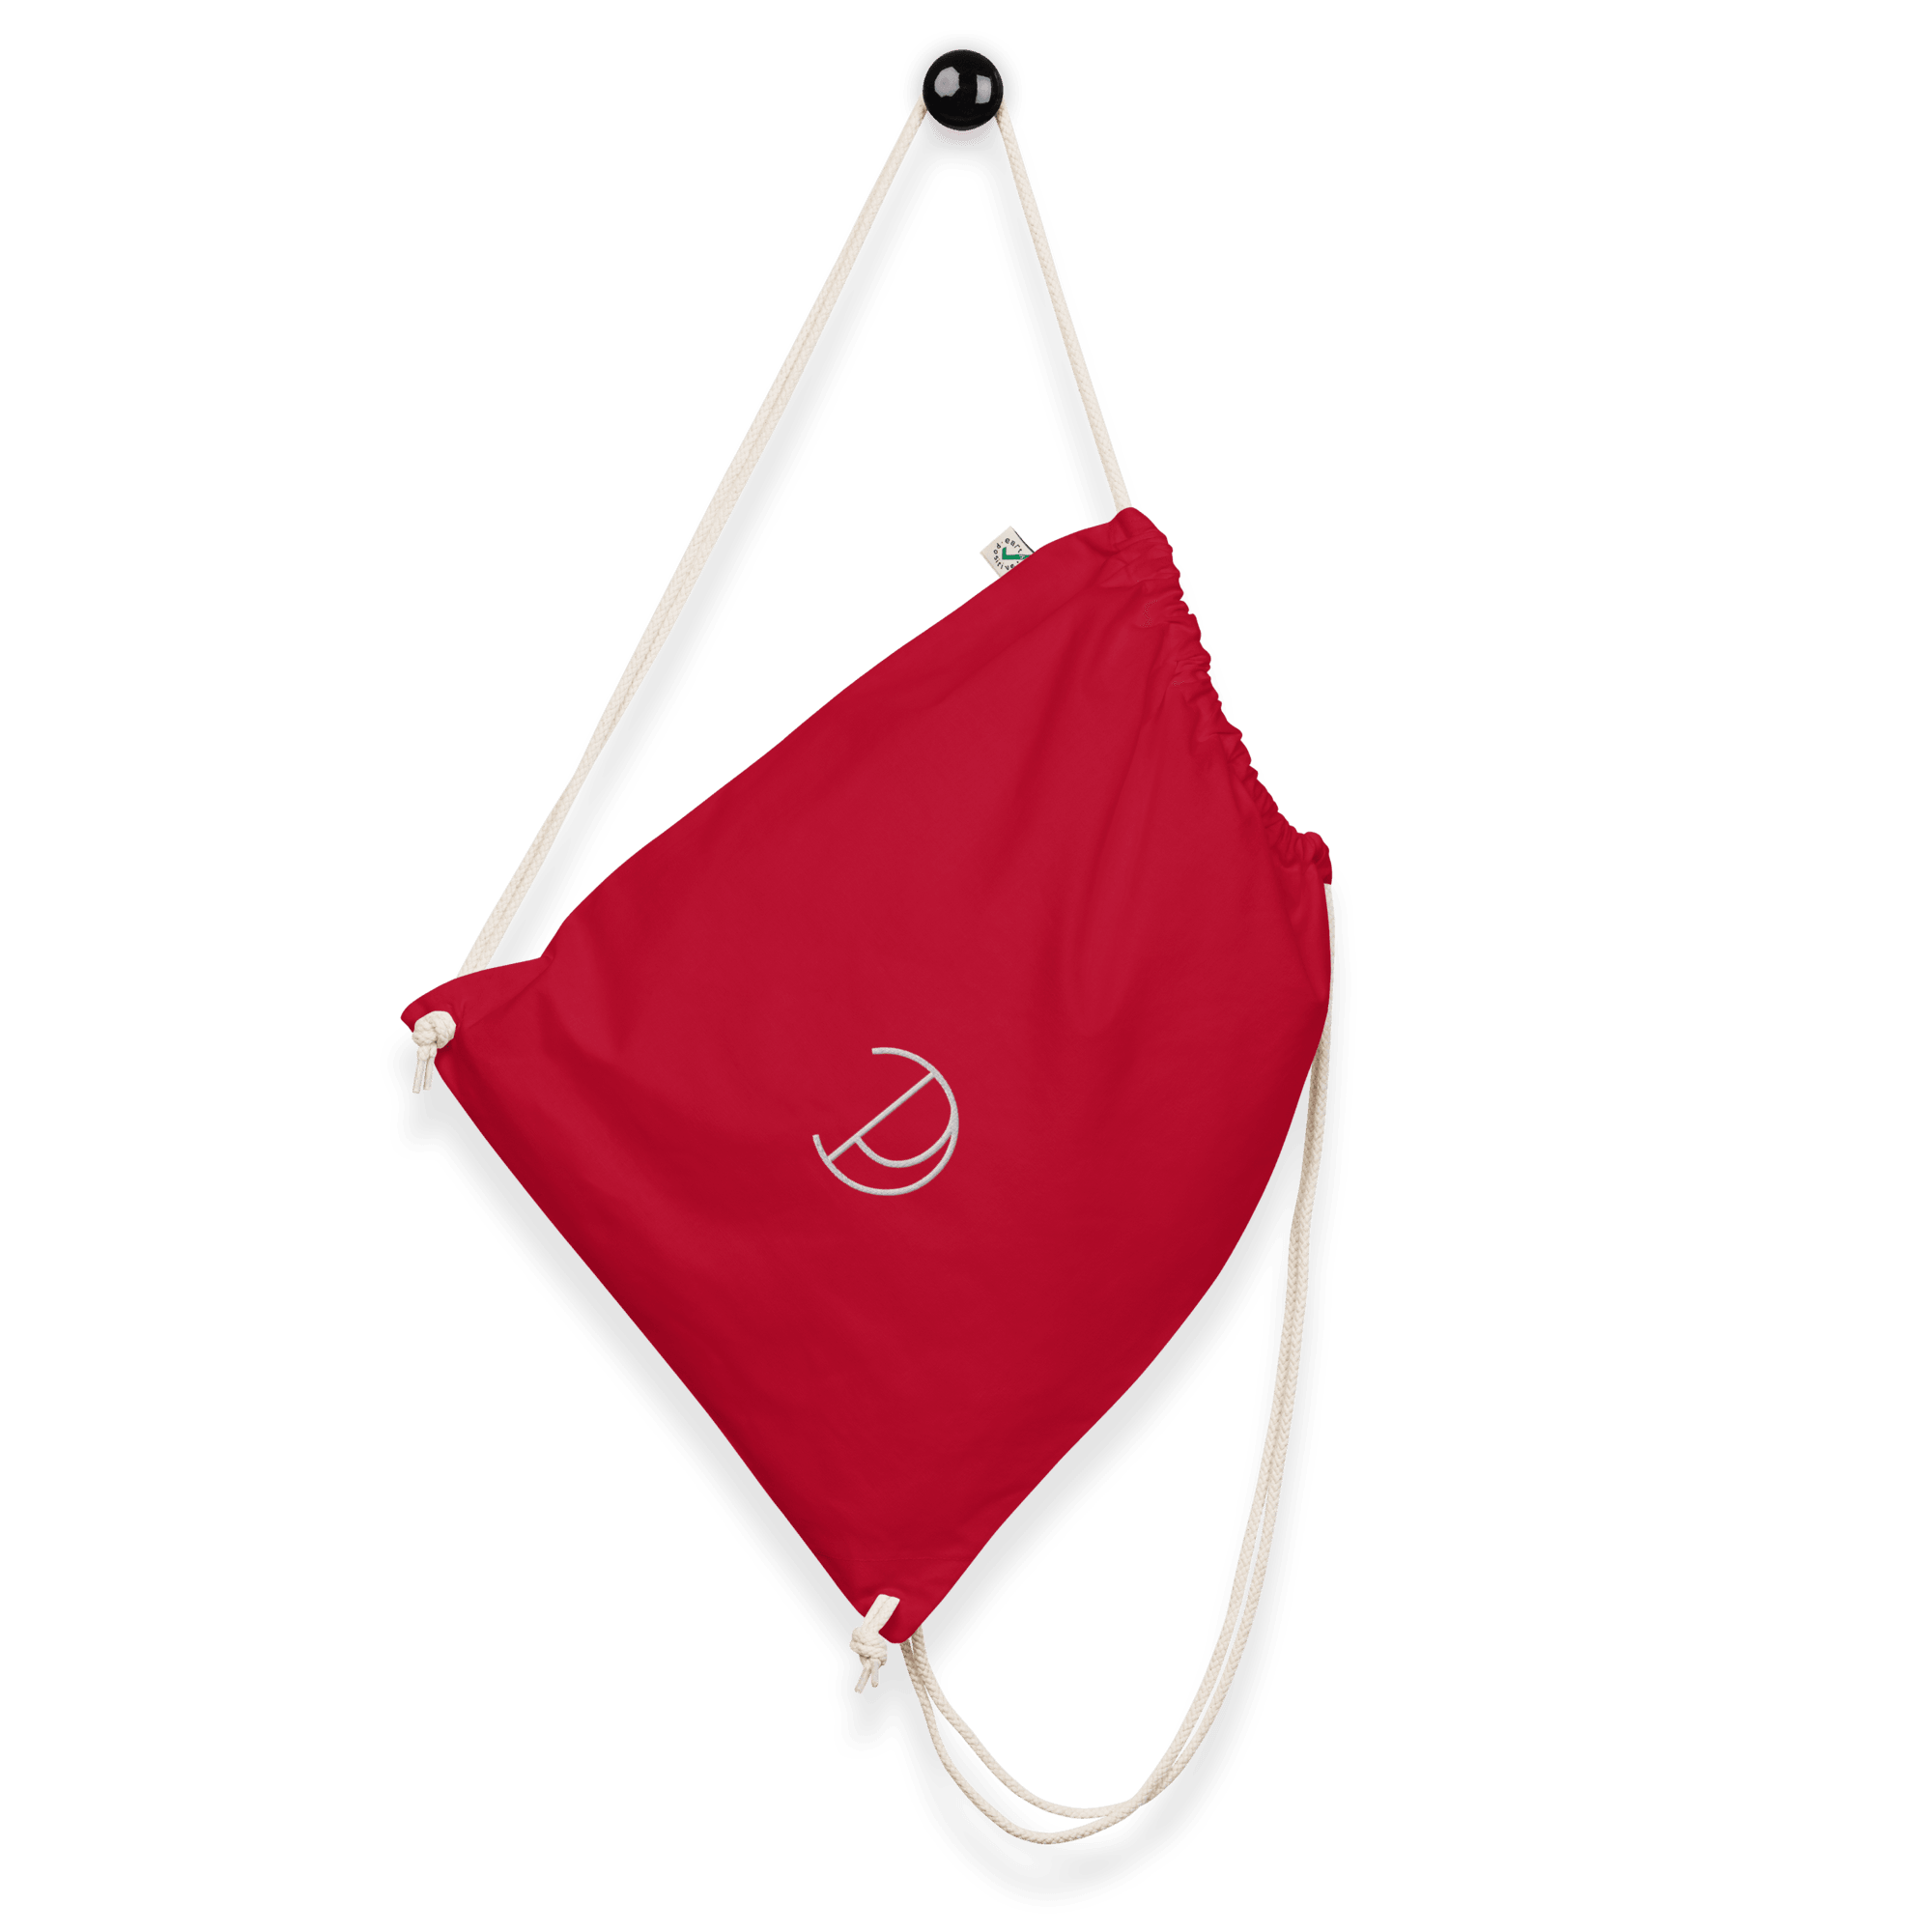 Embroidered P Drawstring Bag | Handbags | pitod.com